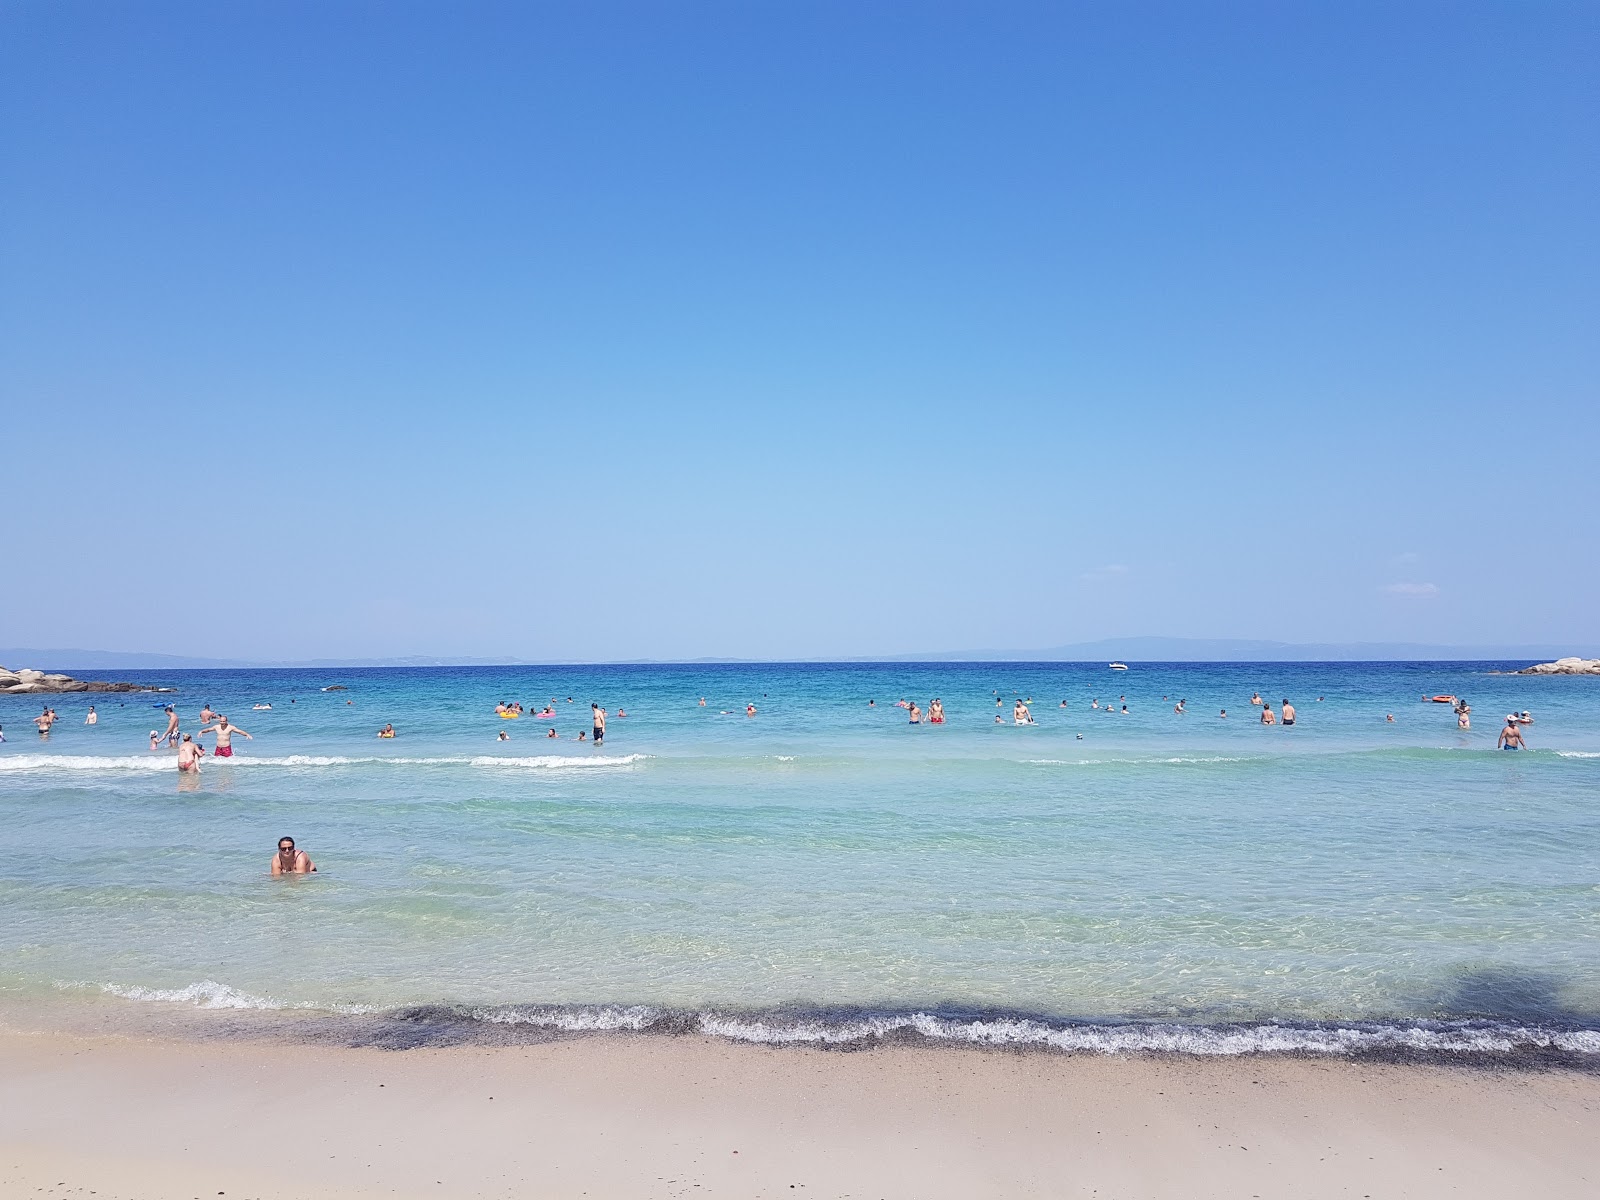 Photo of Karydi beach with small multi bays